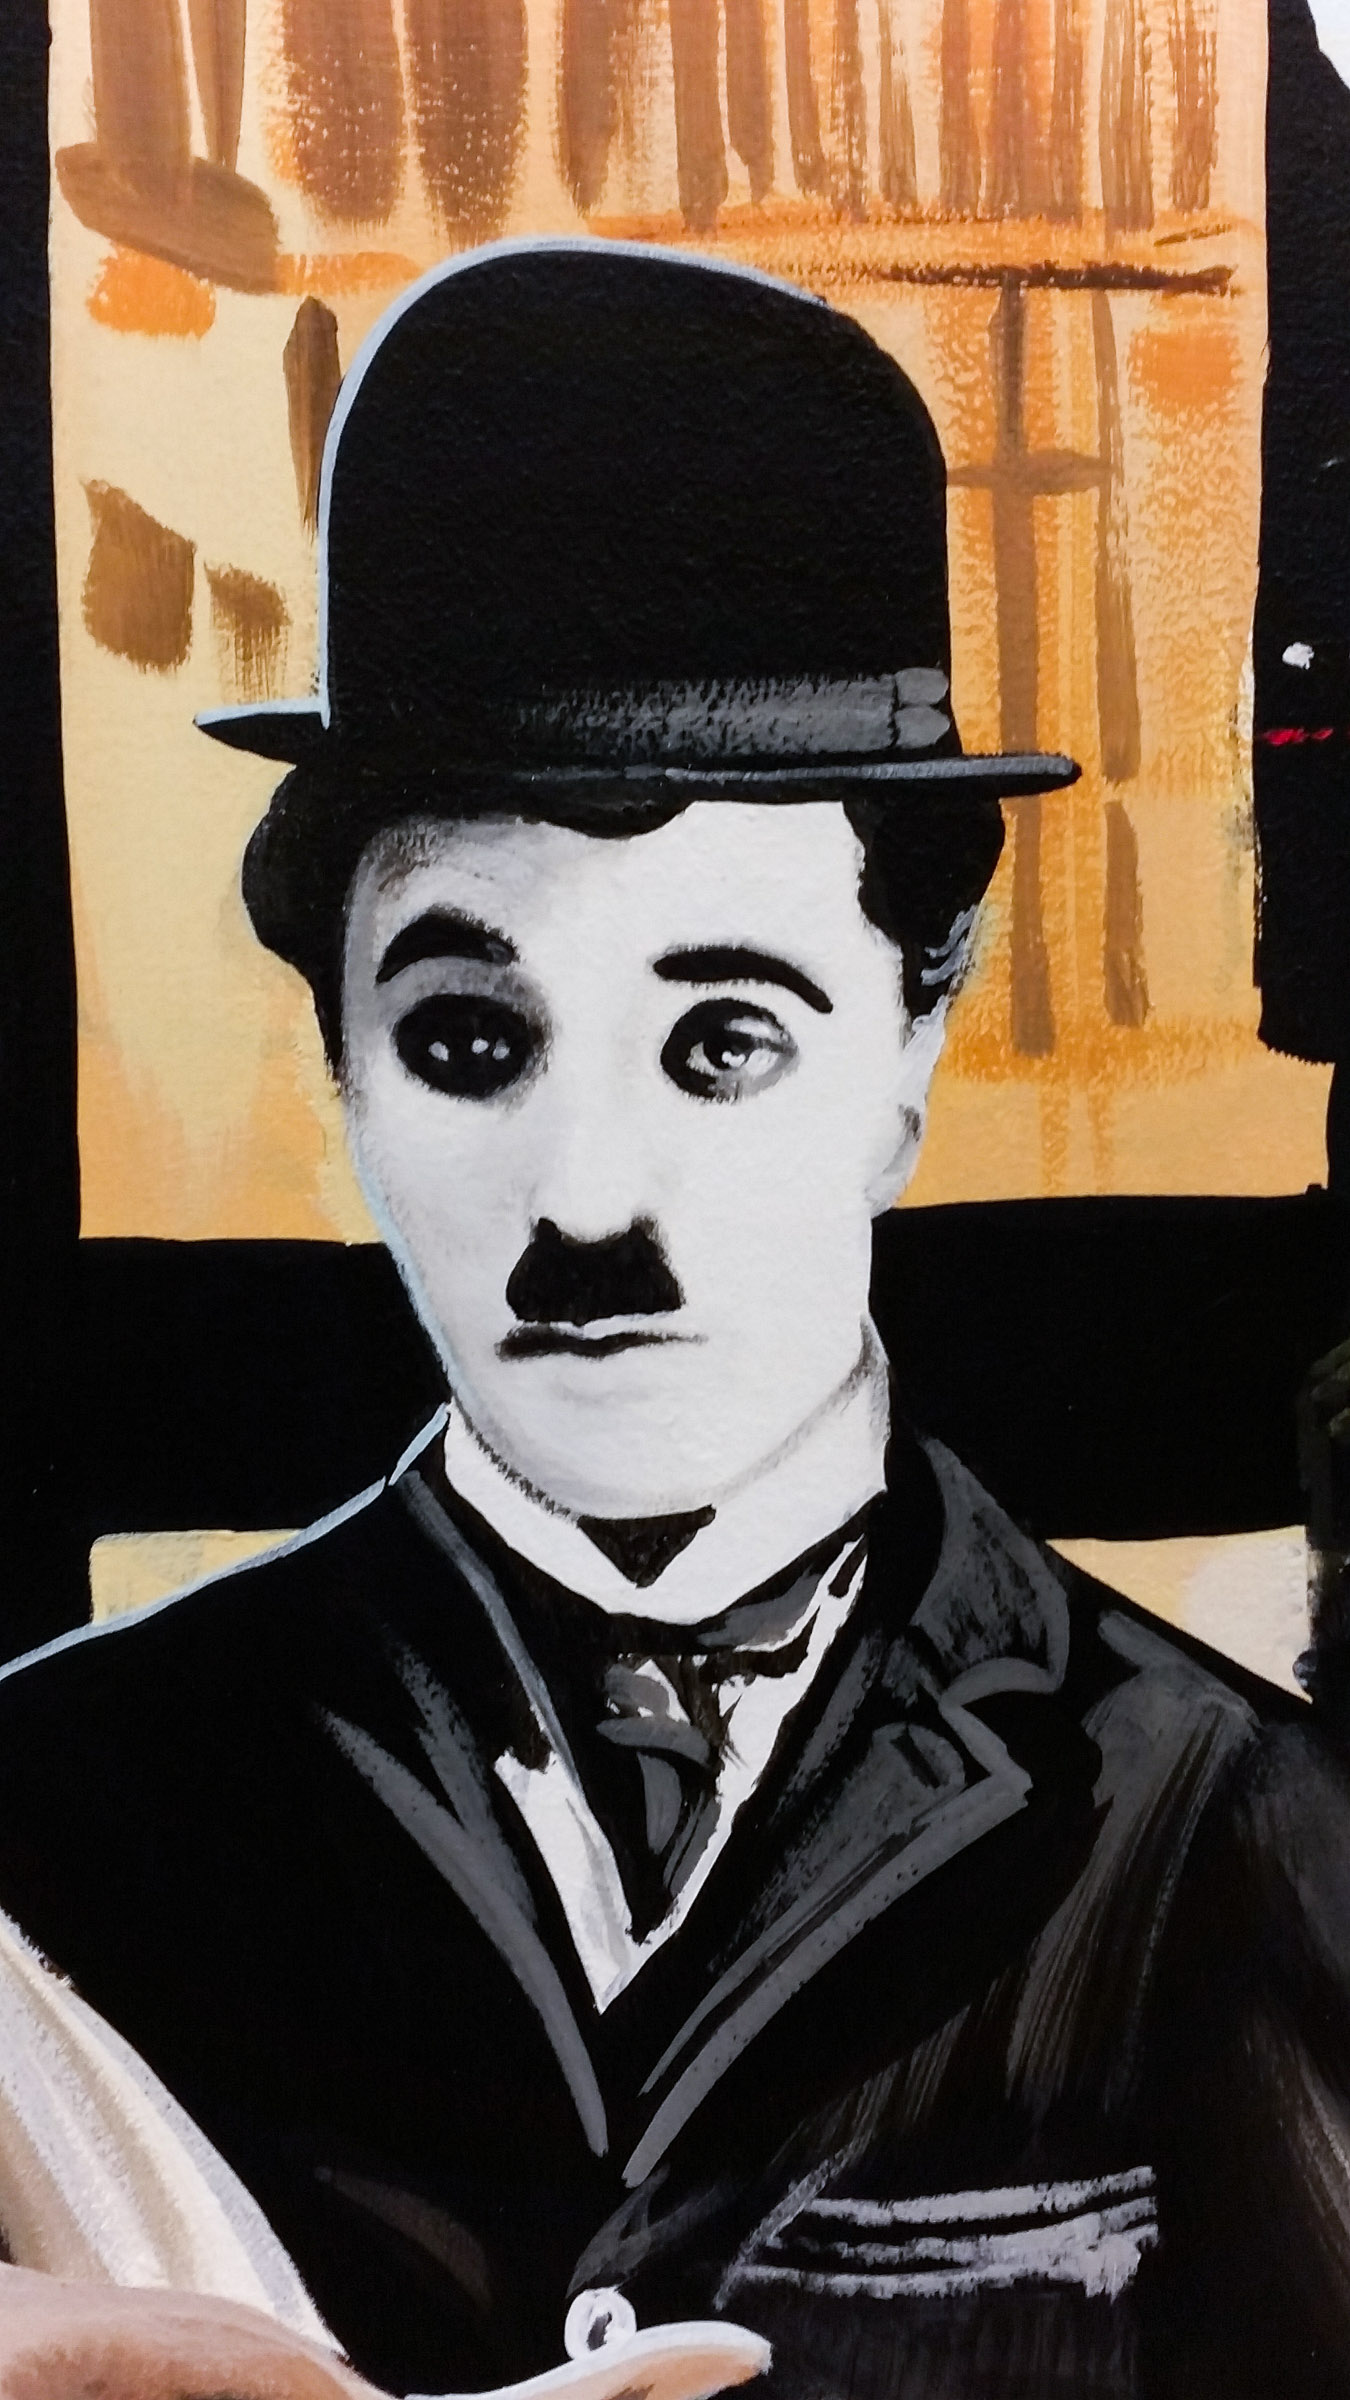 Mural painting of Charlie Chaplin